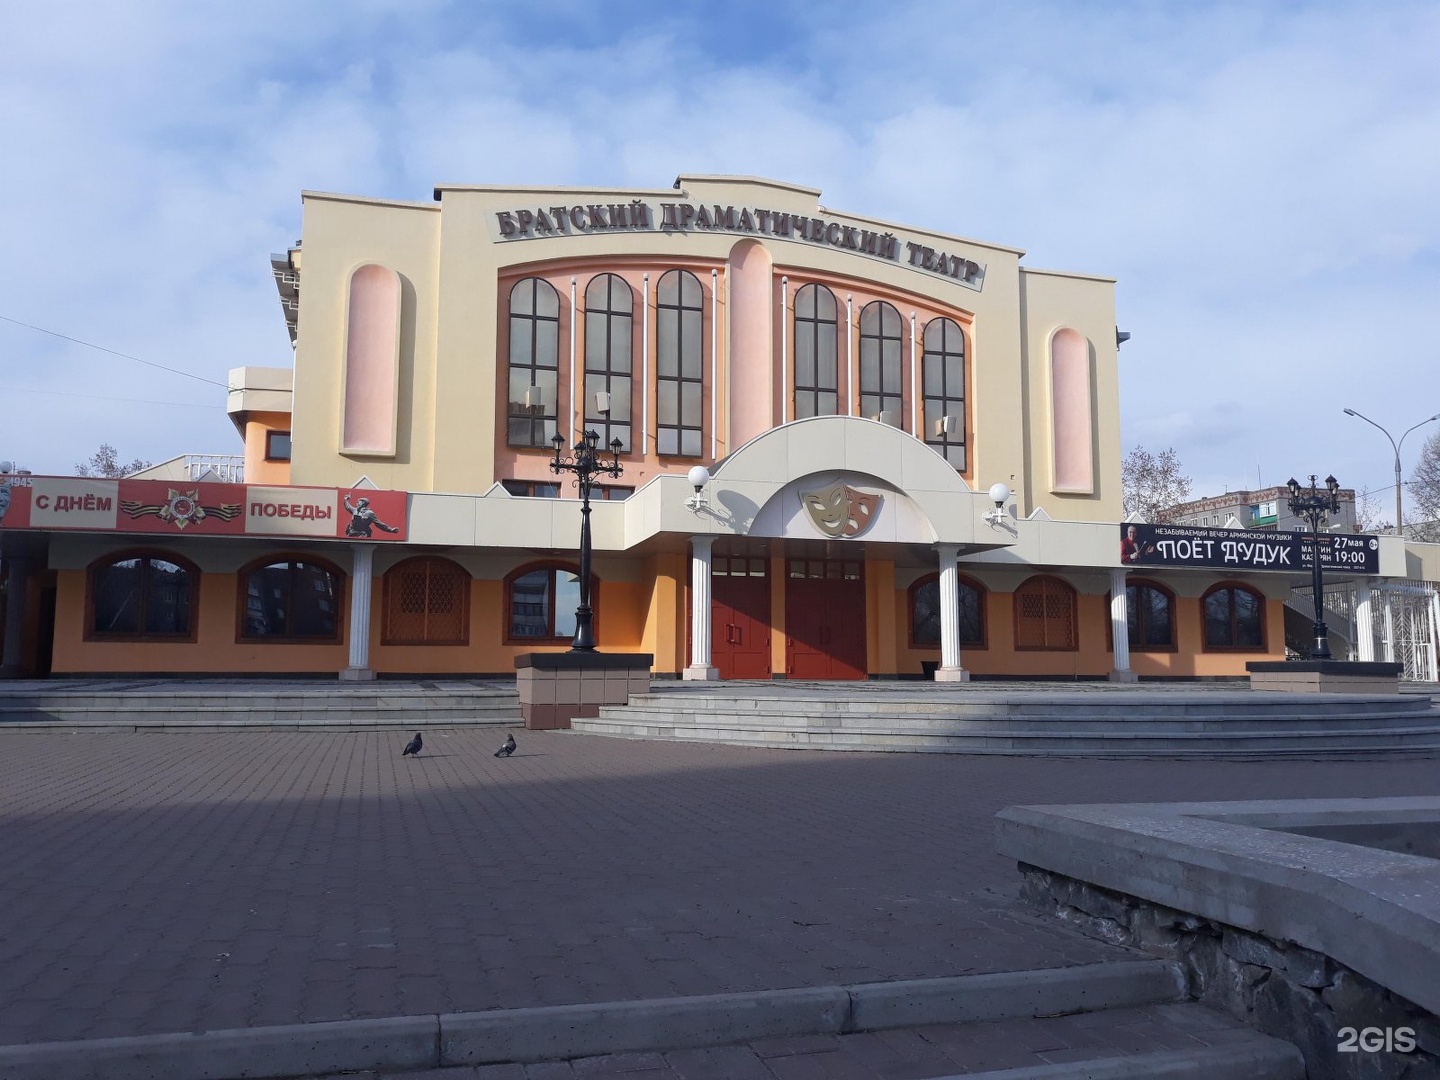 Театр братск